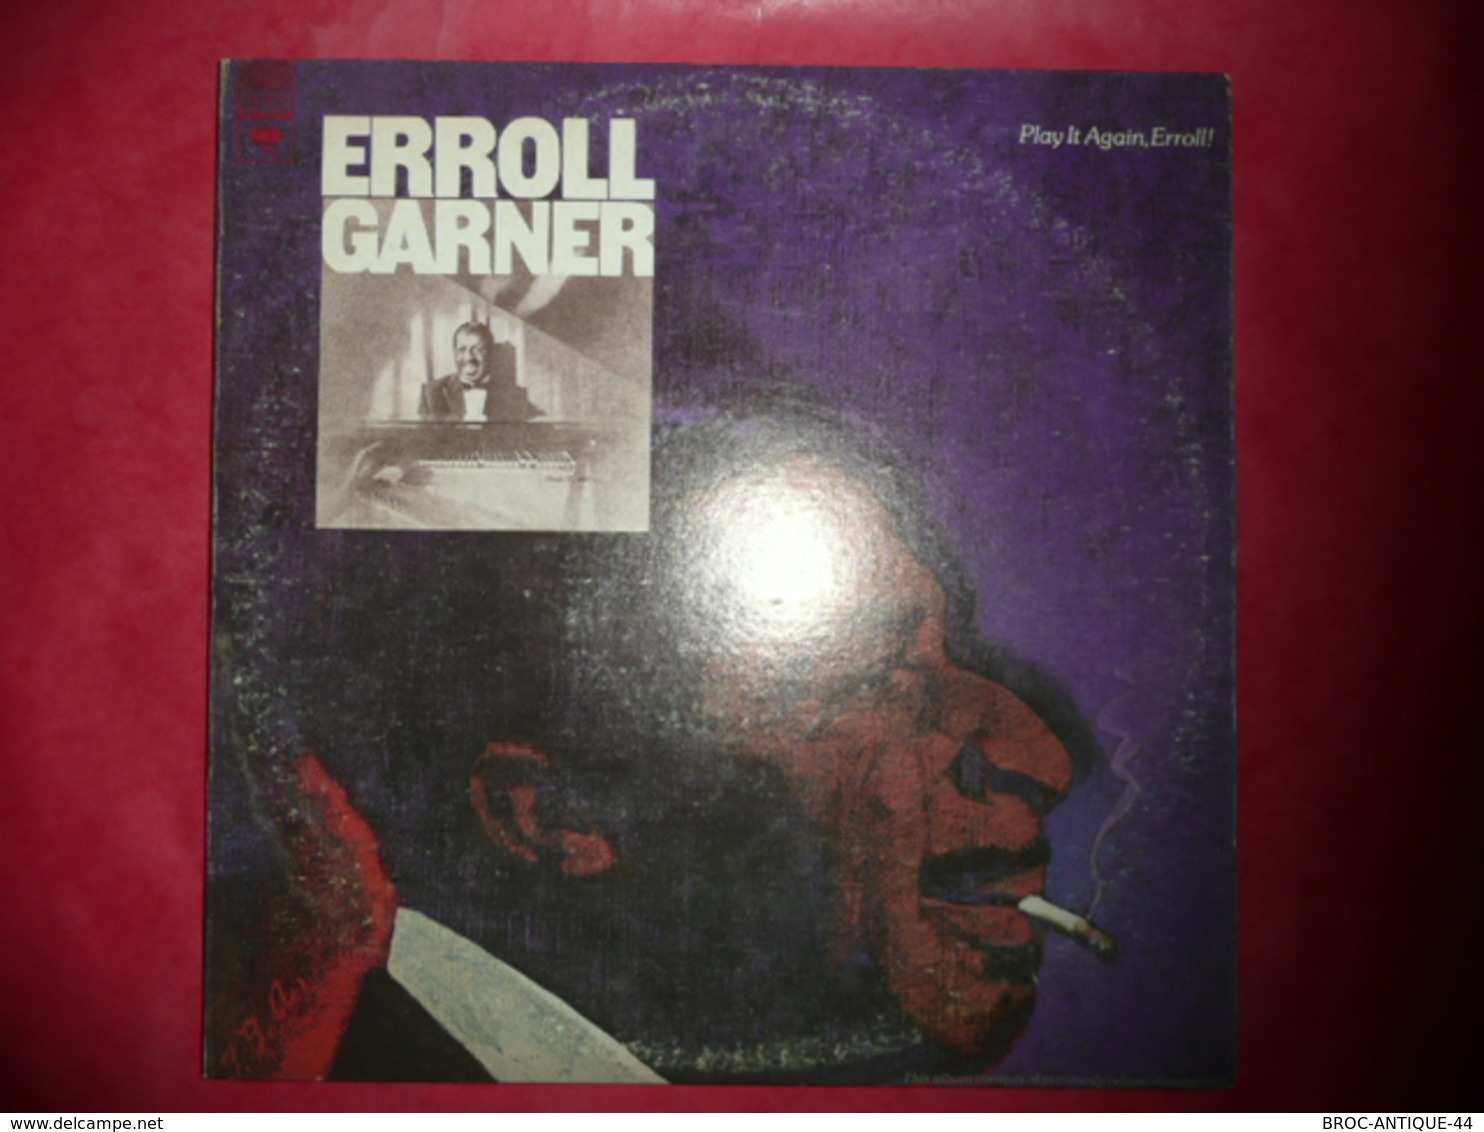 LP33 N°2944 - ERROLL GARNER - PLAY IT AGAIN, ERROLL ! - PG 33424 - 2 LP'S ***** EXCELLENT - Jazz